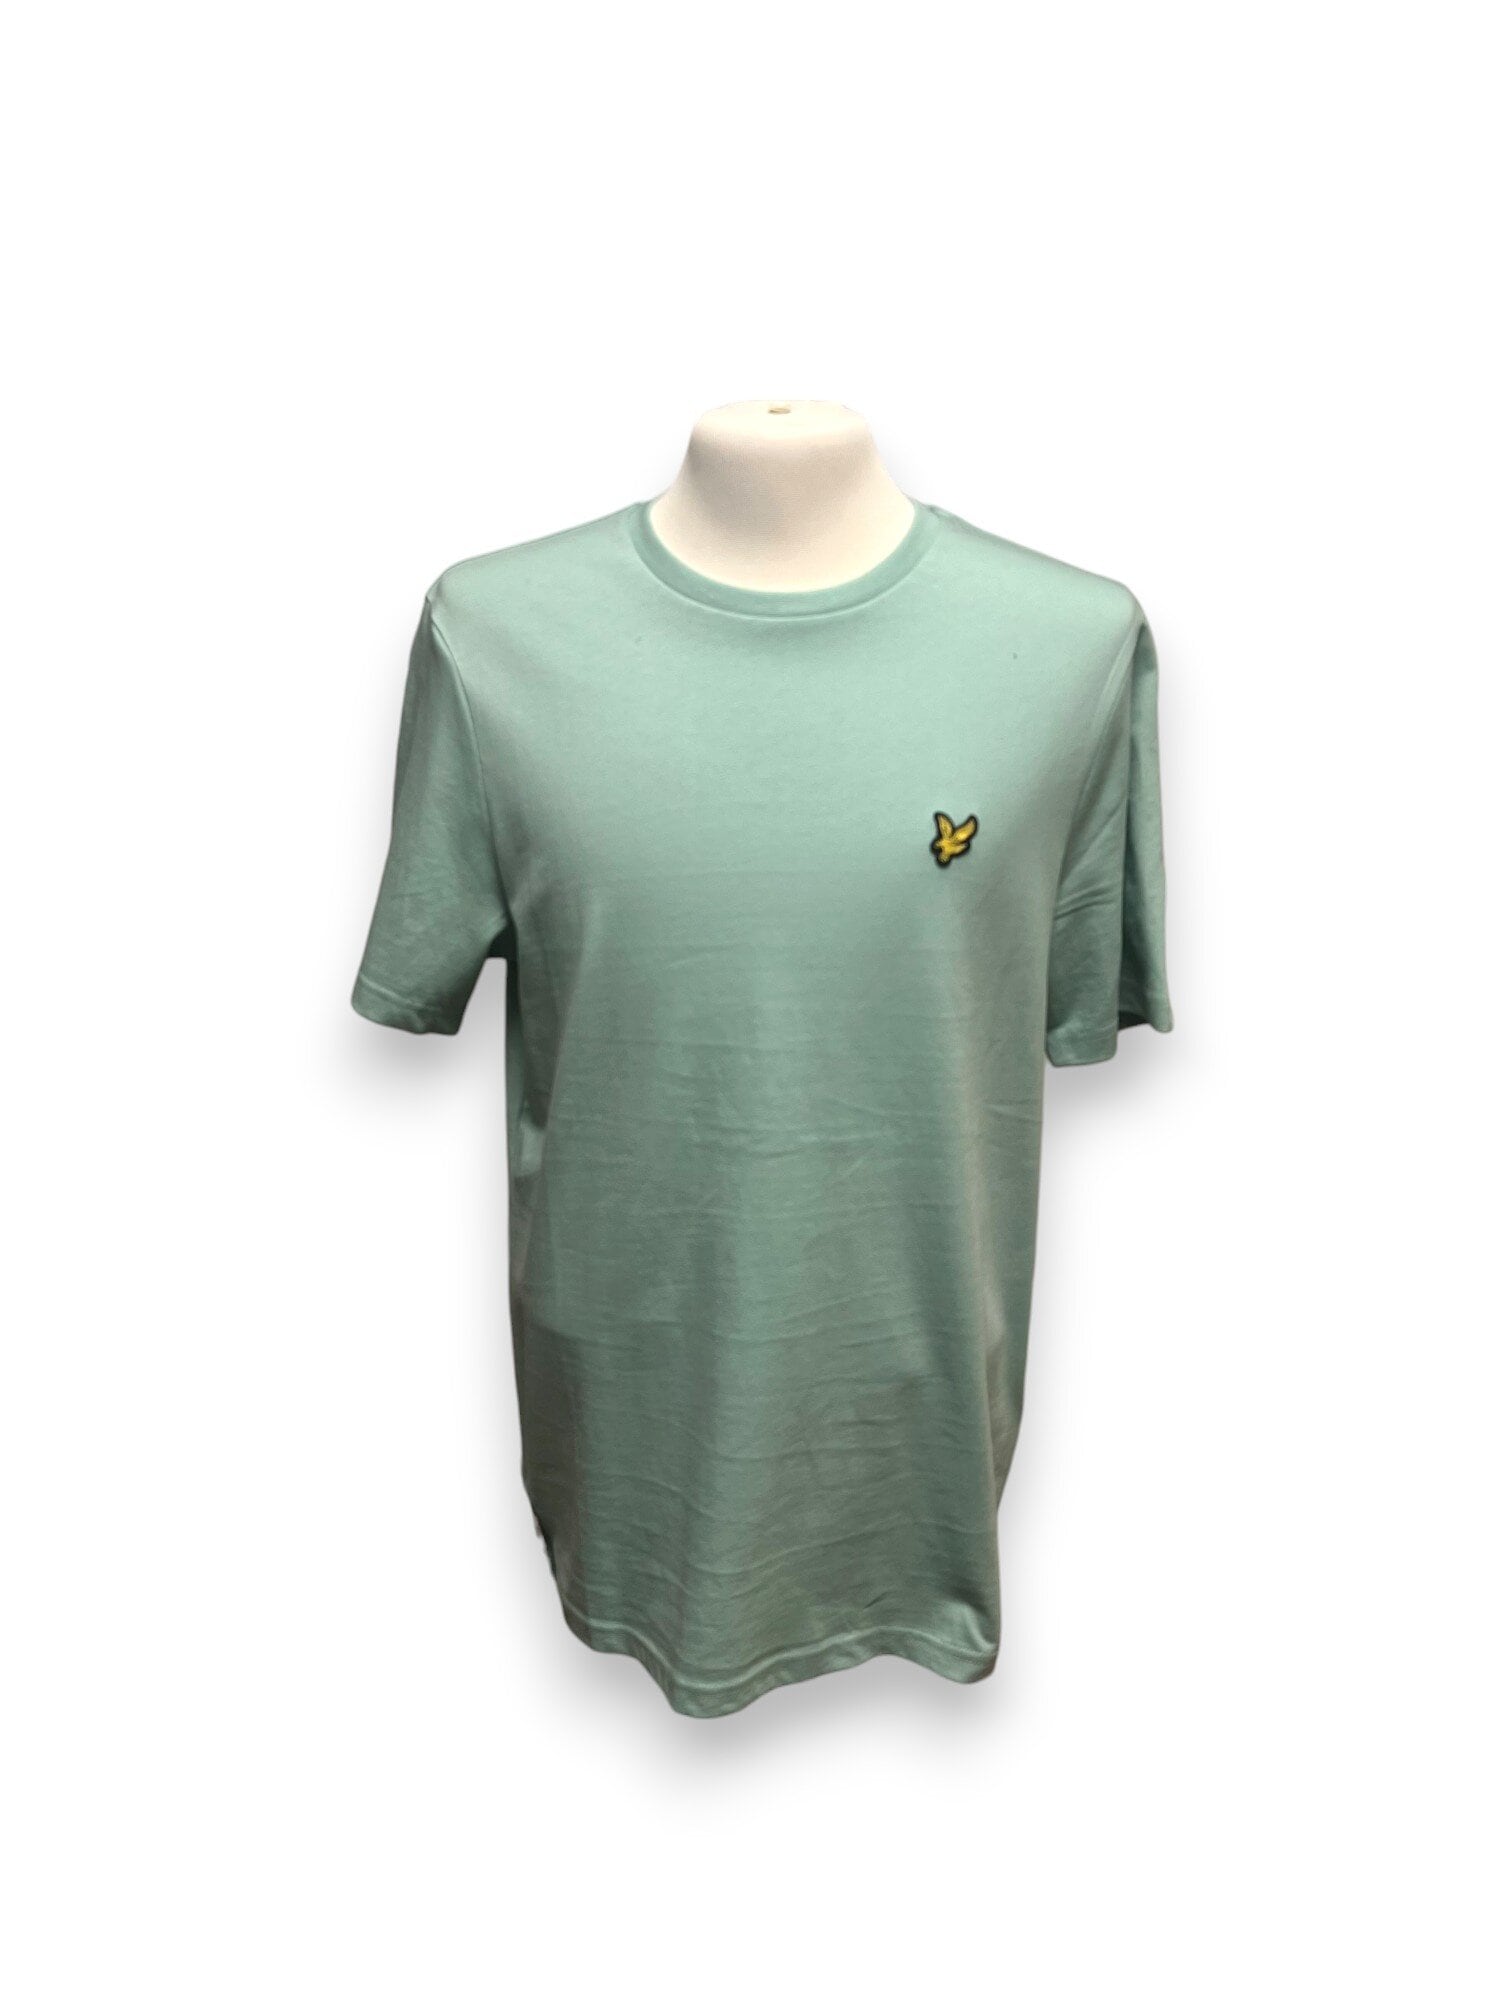 Plain T-shirt - Turquoise Shadow